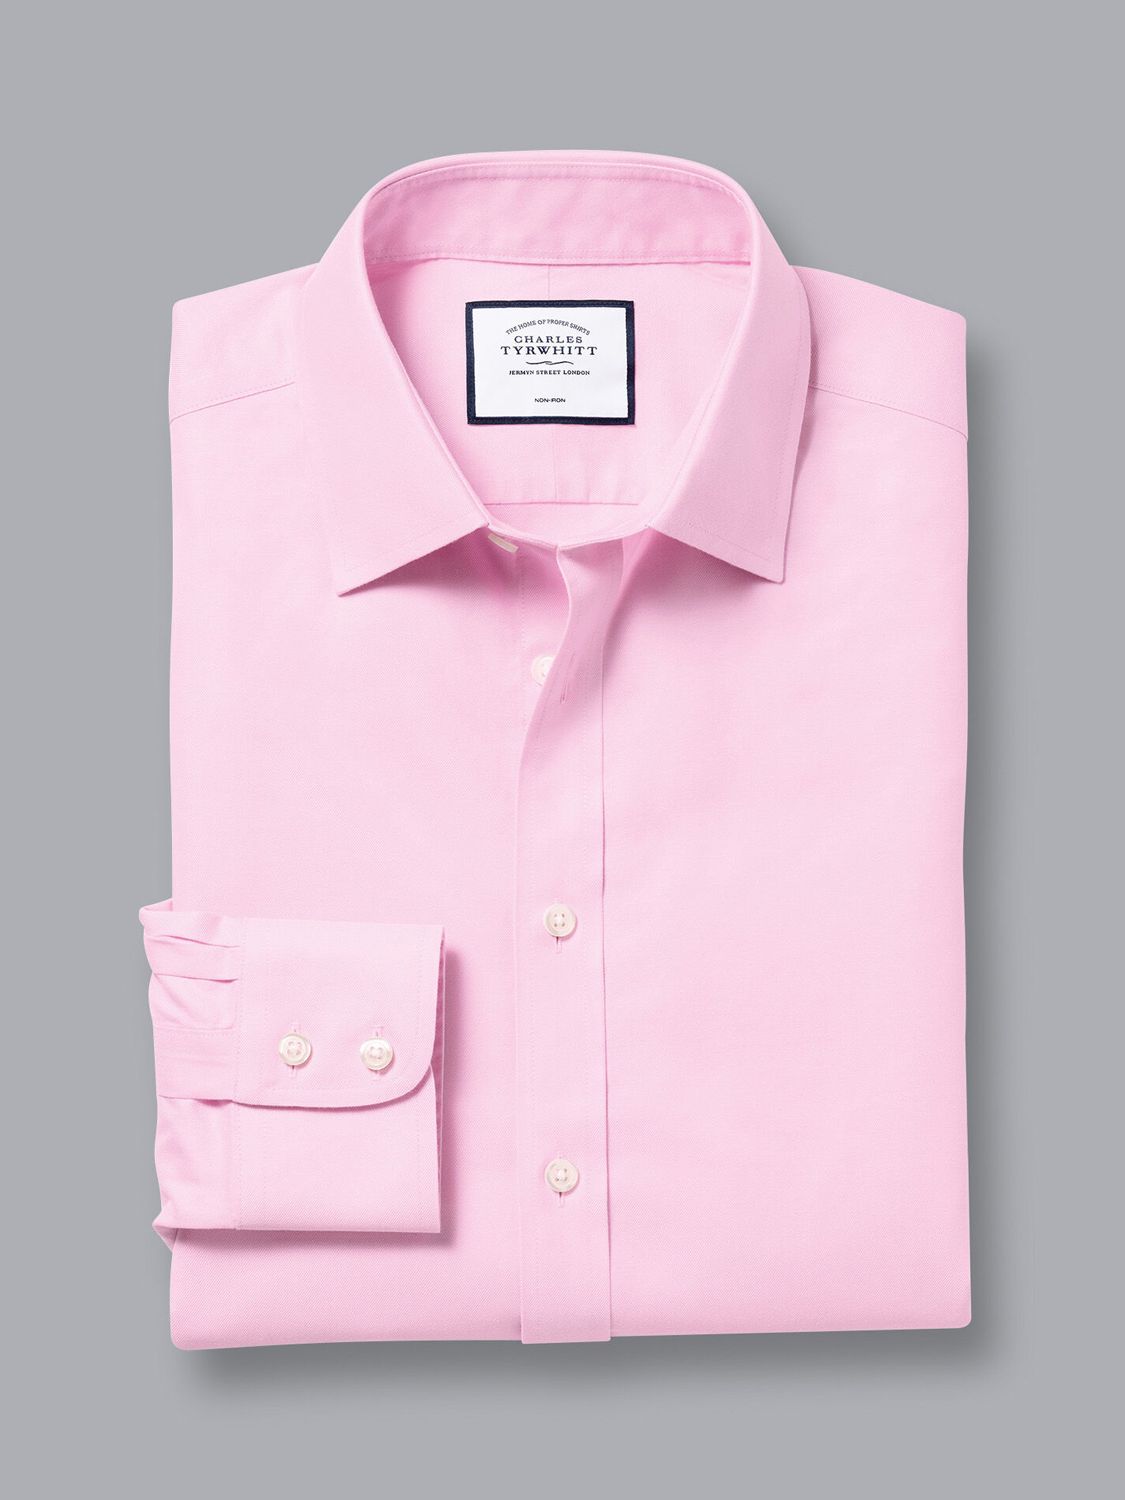 Charles Tyrwhitt Non-Iron Twill Shirt, Pink, Collar size: 16.5", Sleeve length: 34"